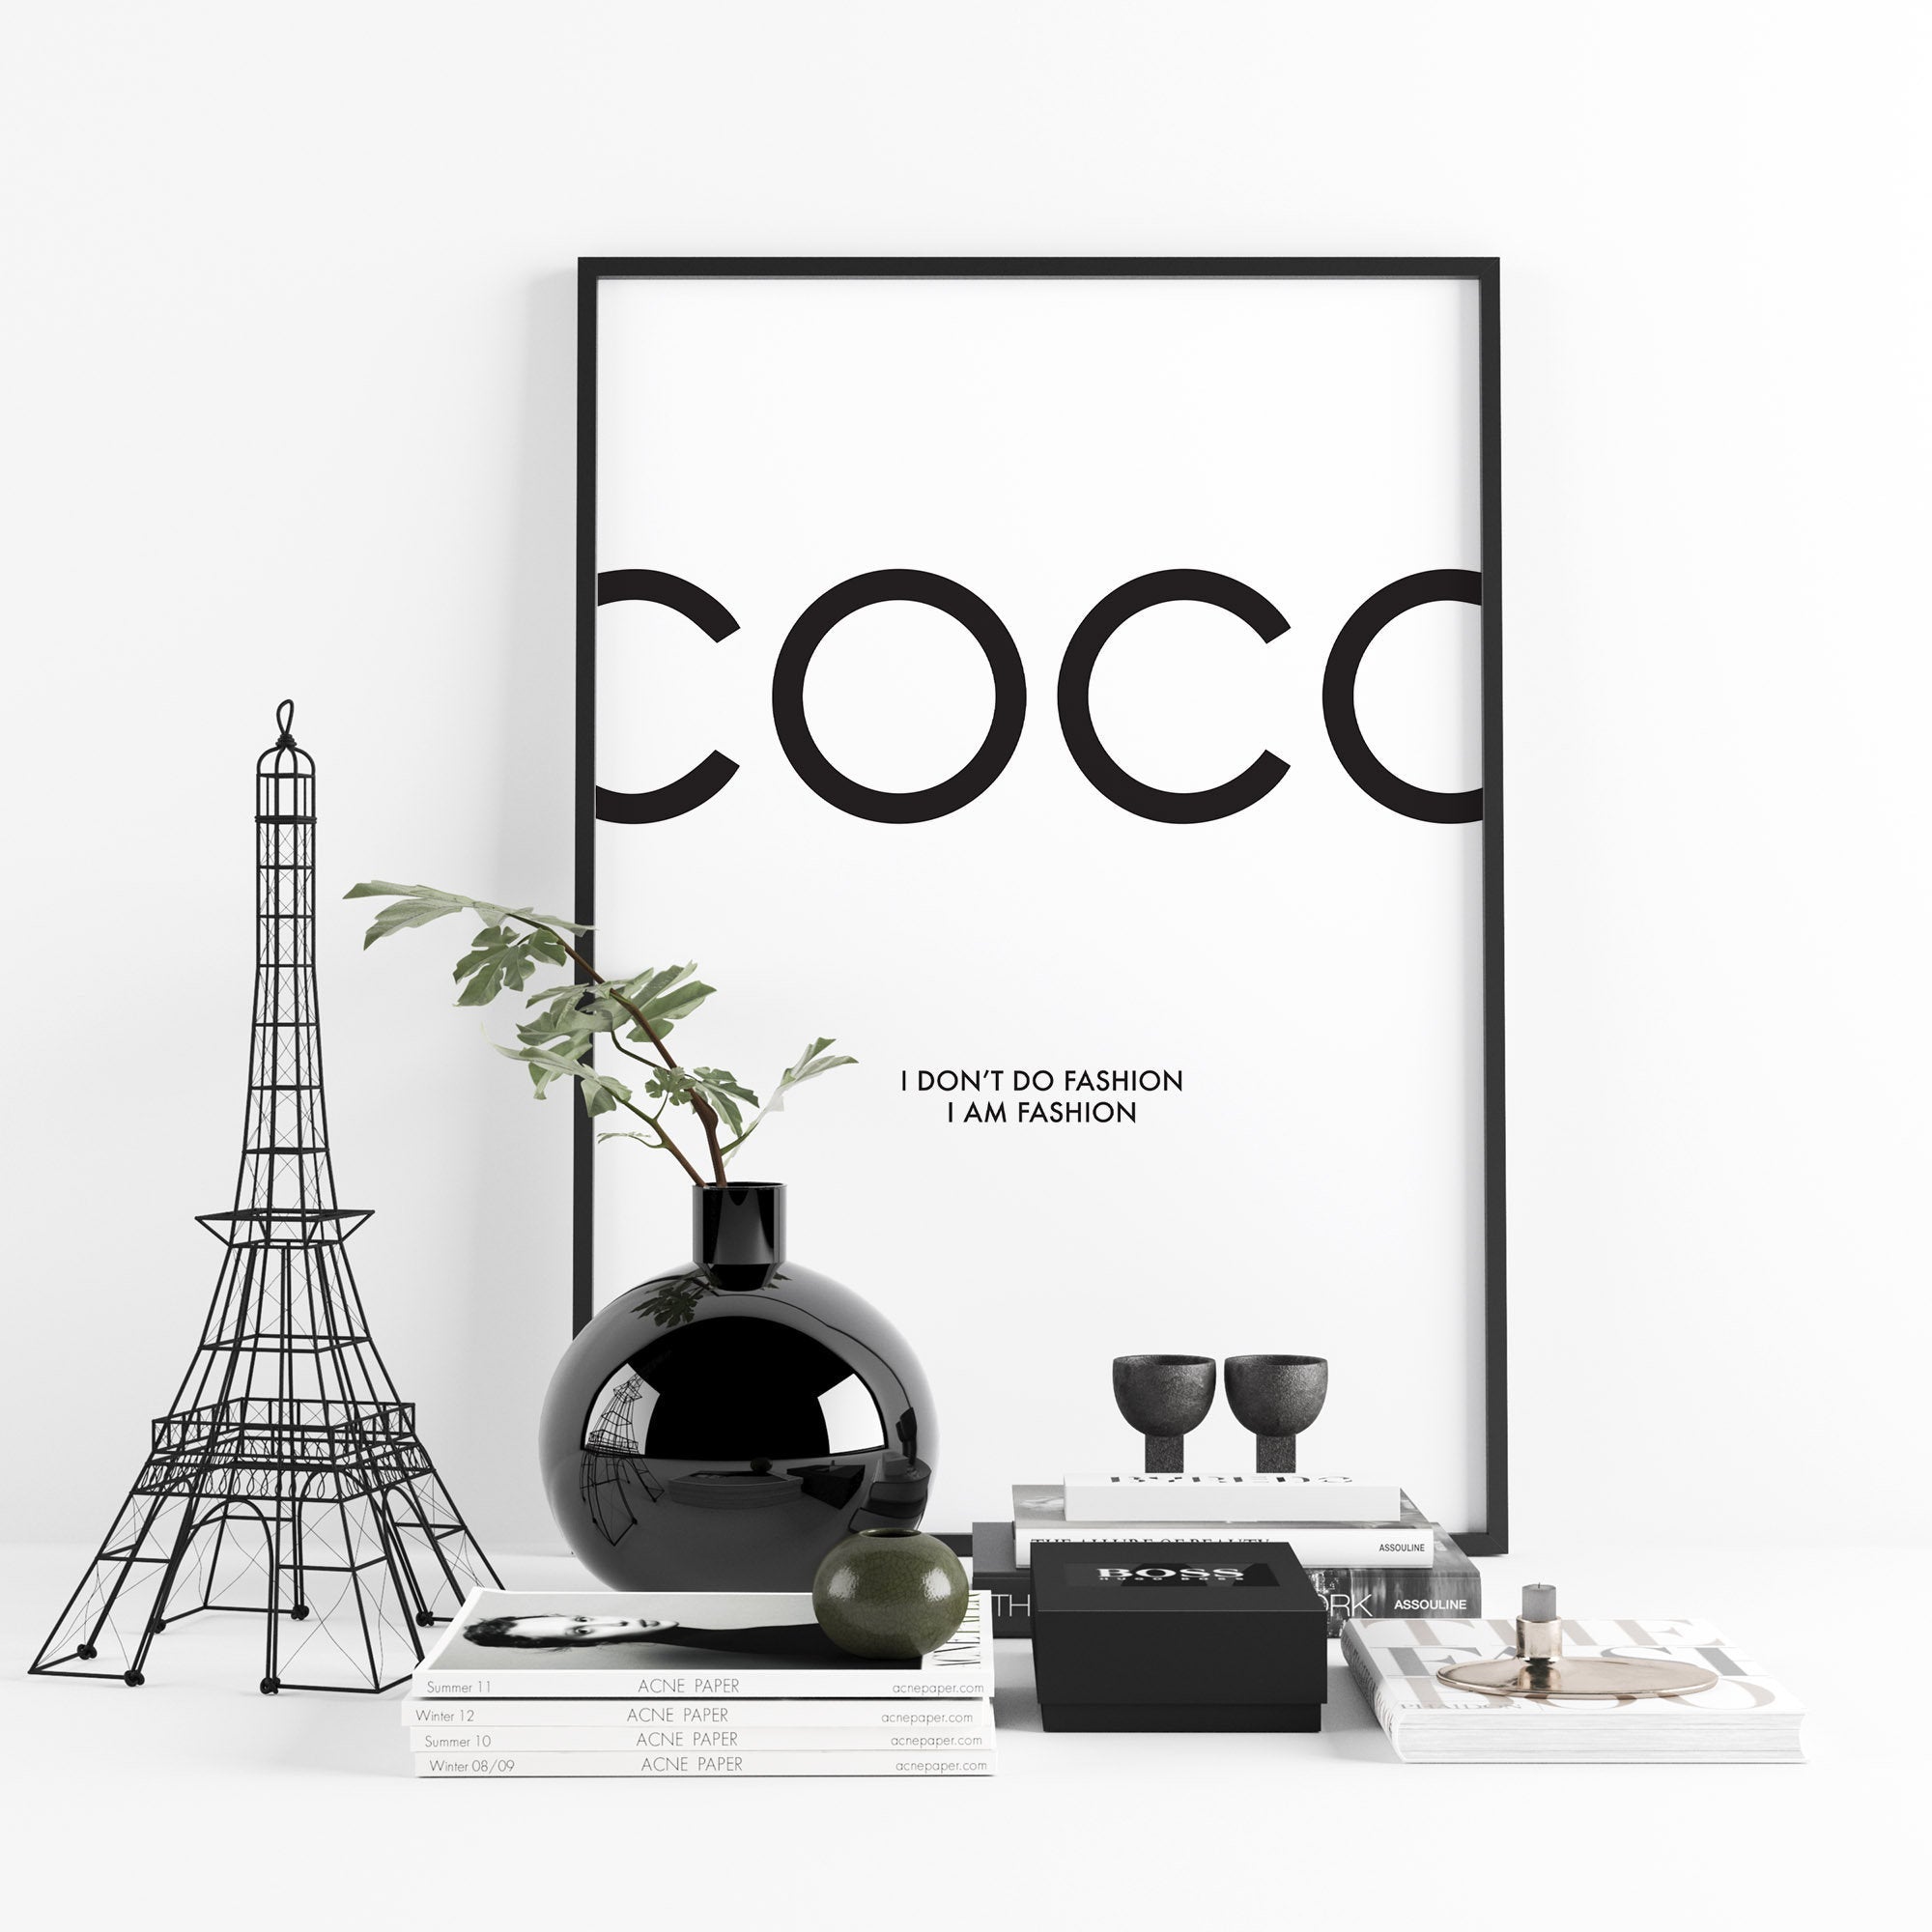 Coco Chanel Quote Print, I am Fashion Poster